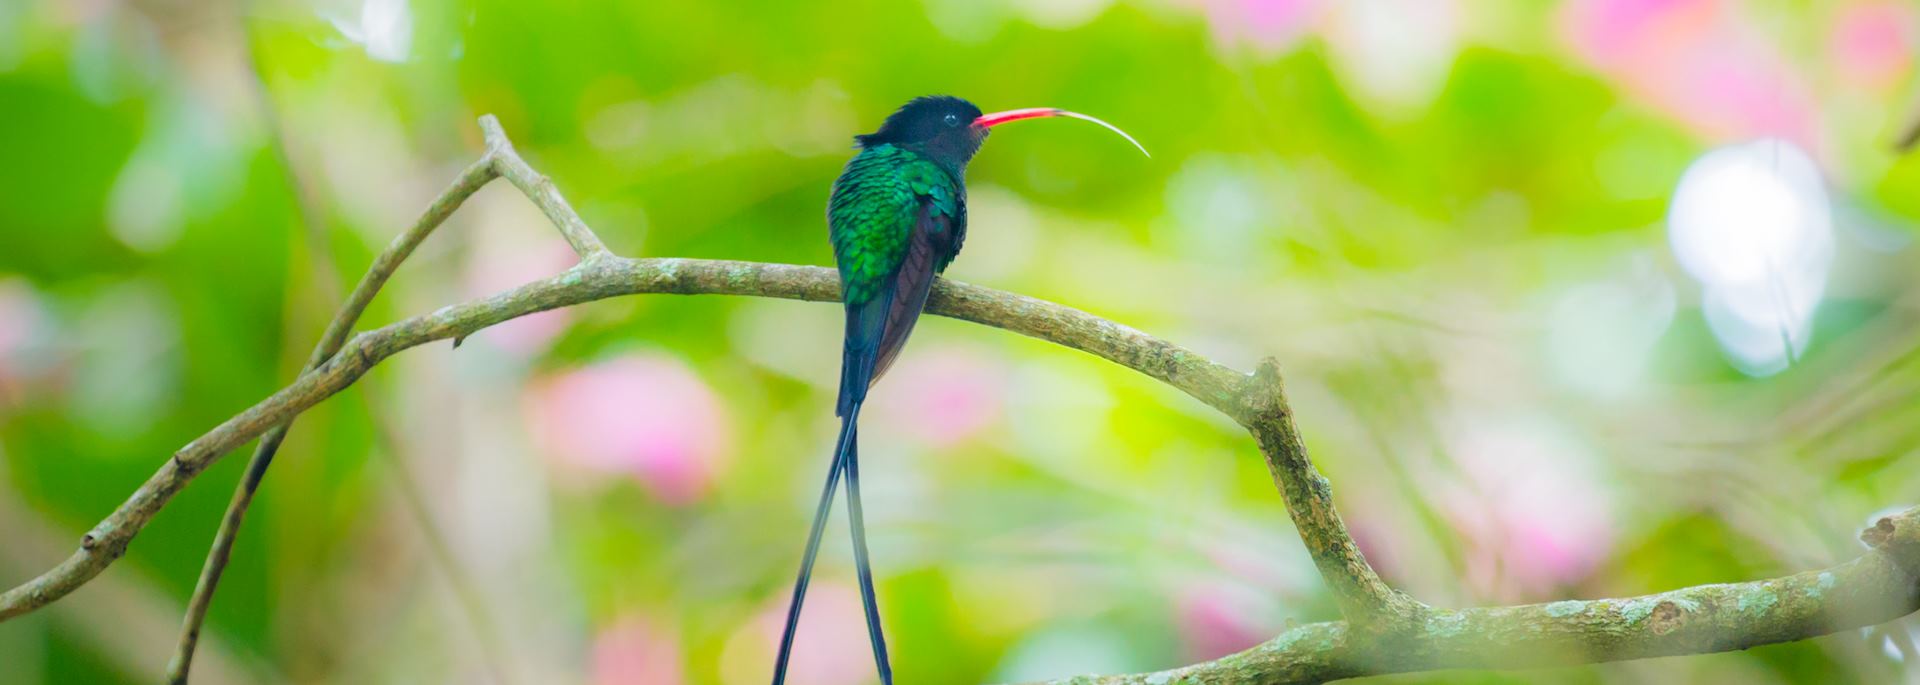 Hummingbird, Jamaica